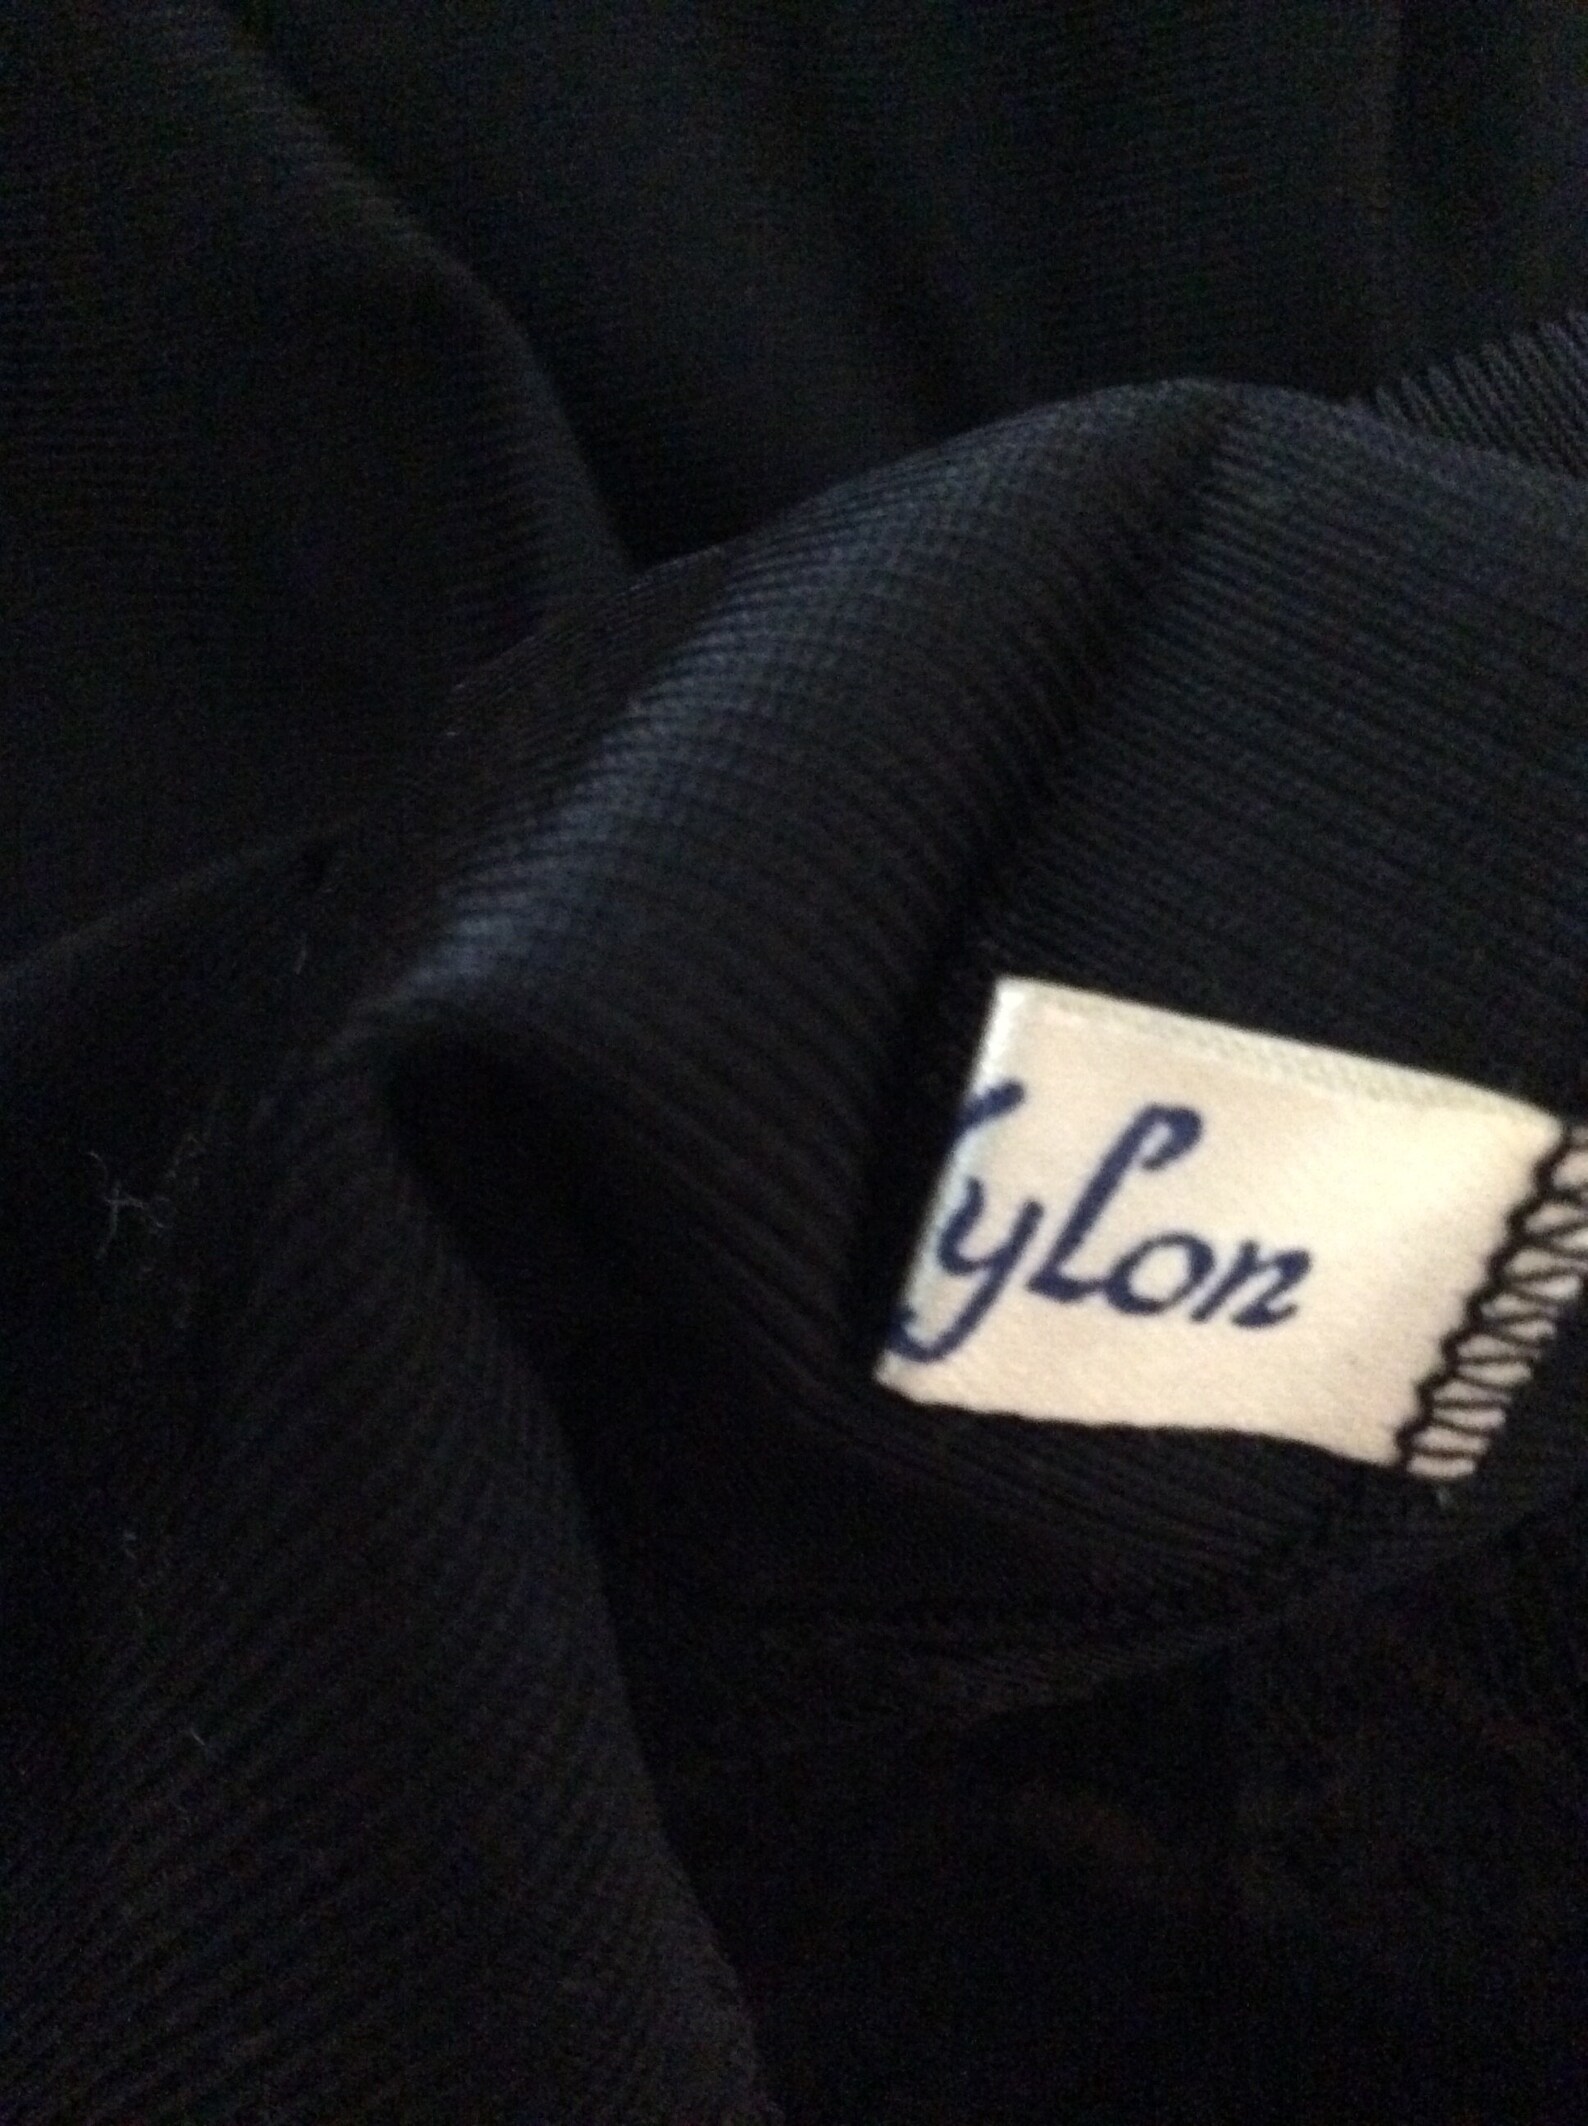 Vintage Full Slip 1950s Black Nylon Lace Real Monde Size 34 | Etsy